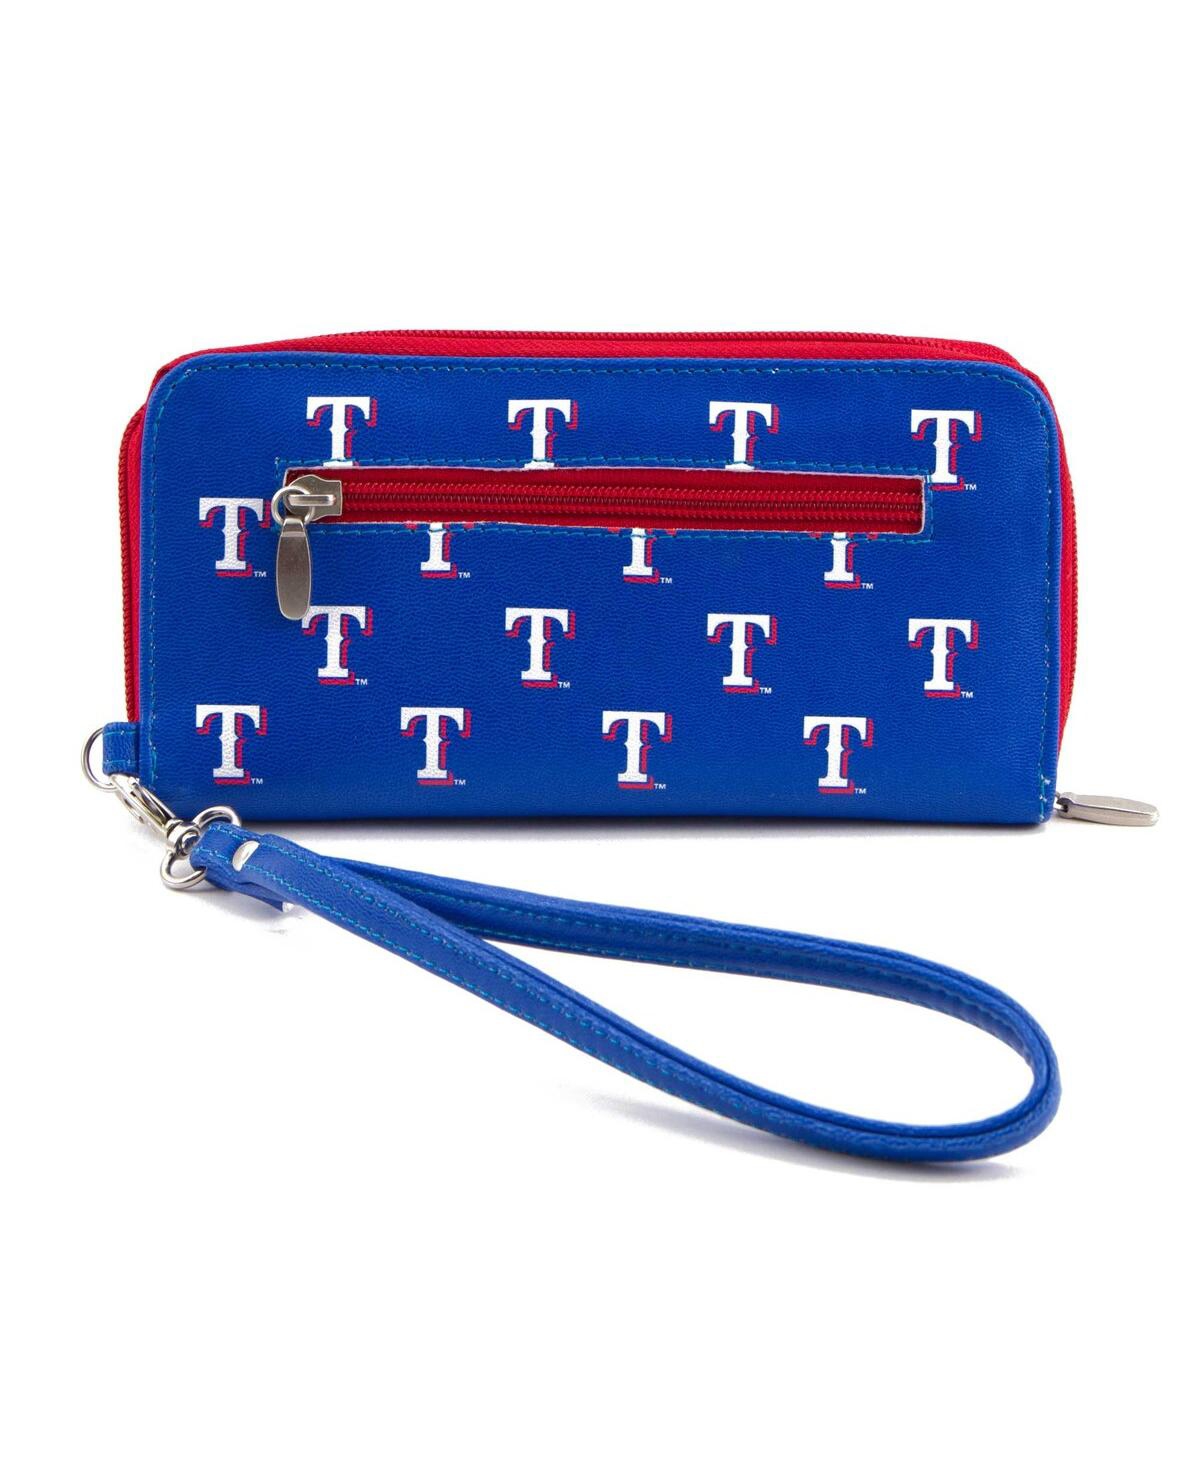 Eagles Wings Women's Texas Rangers Zip-around Wristlet Wallet In Blue